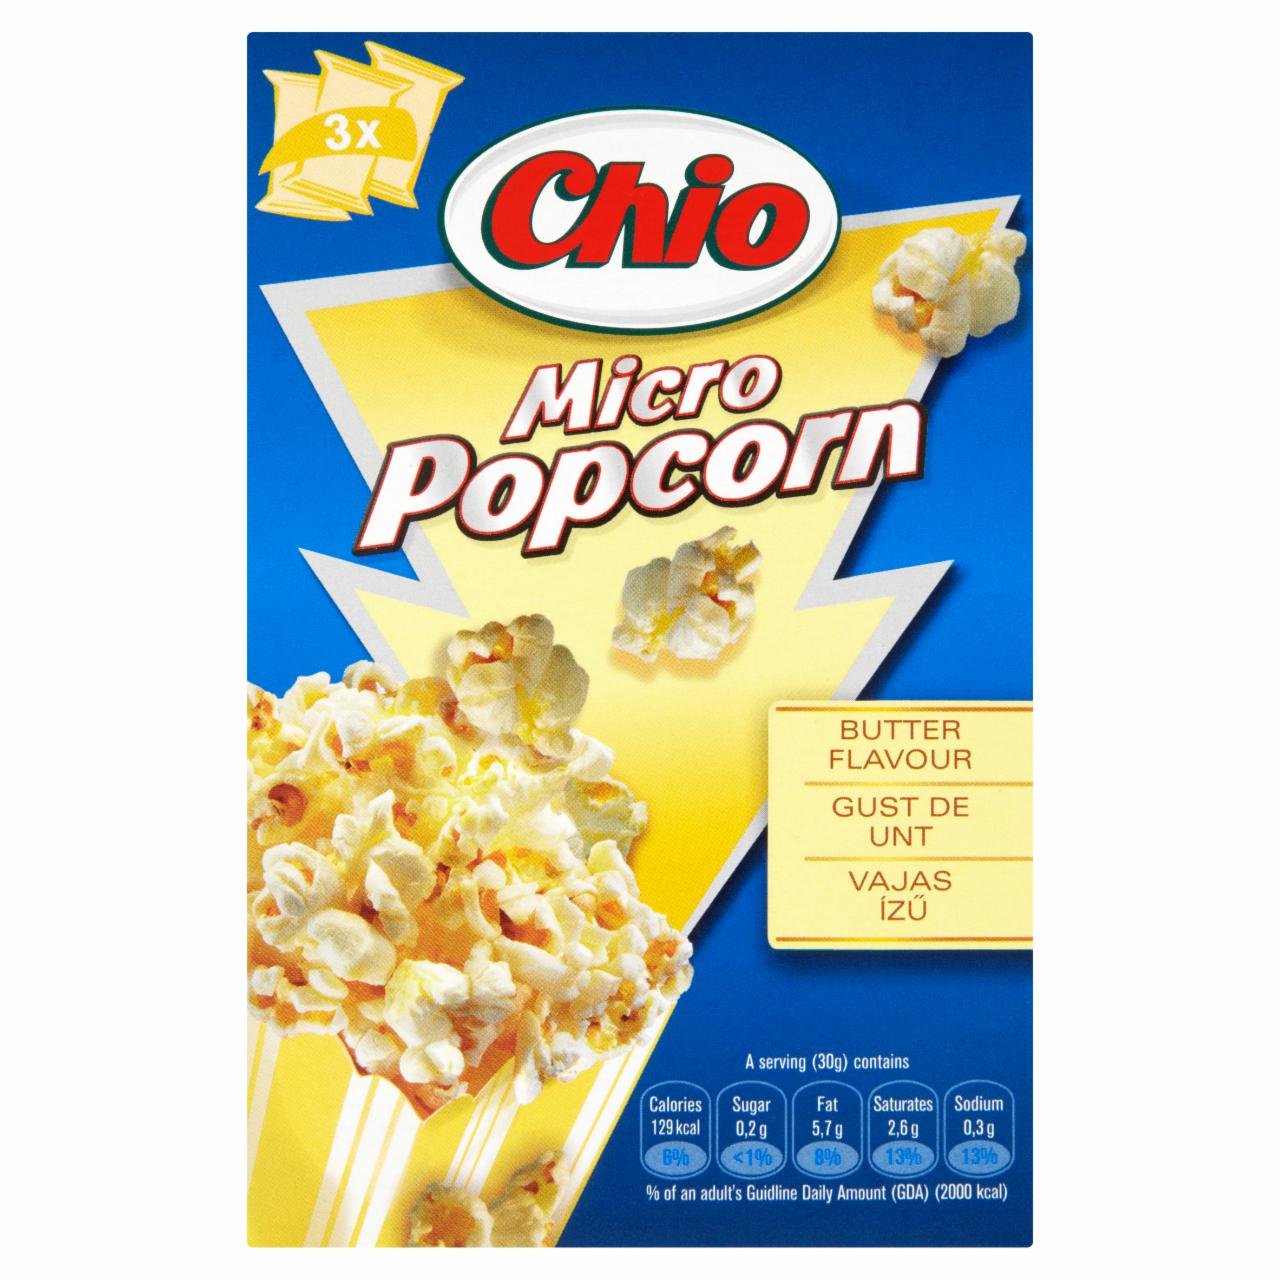 Képek - Micro Popcorn vajas ízű kipattogtatható kukorica Chio